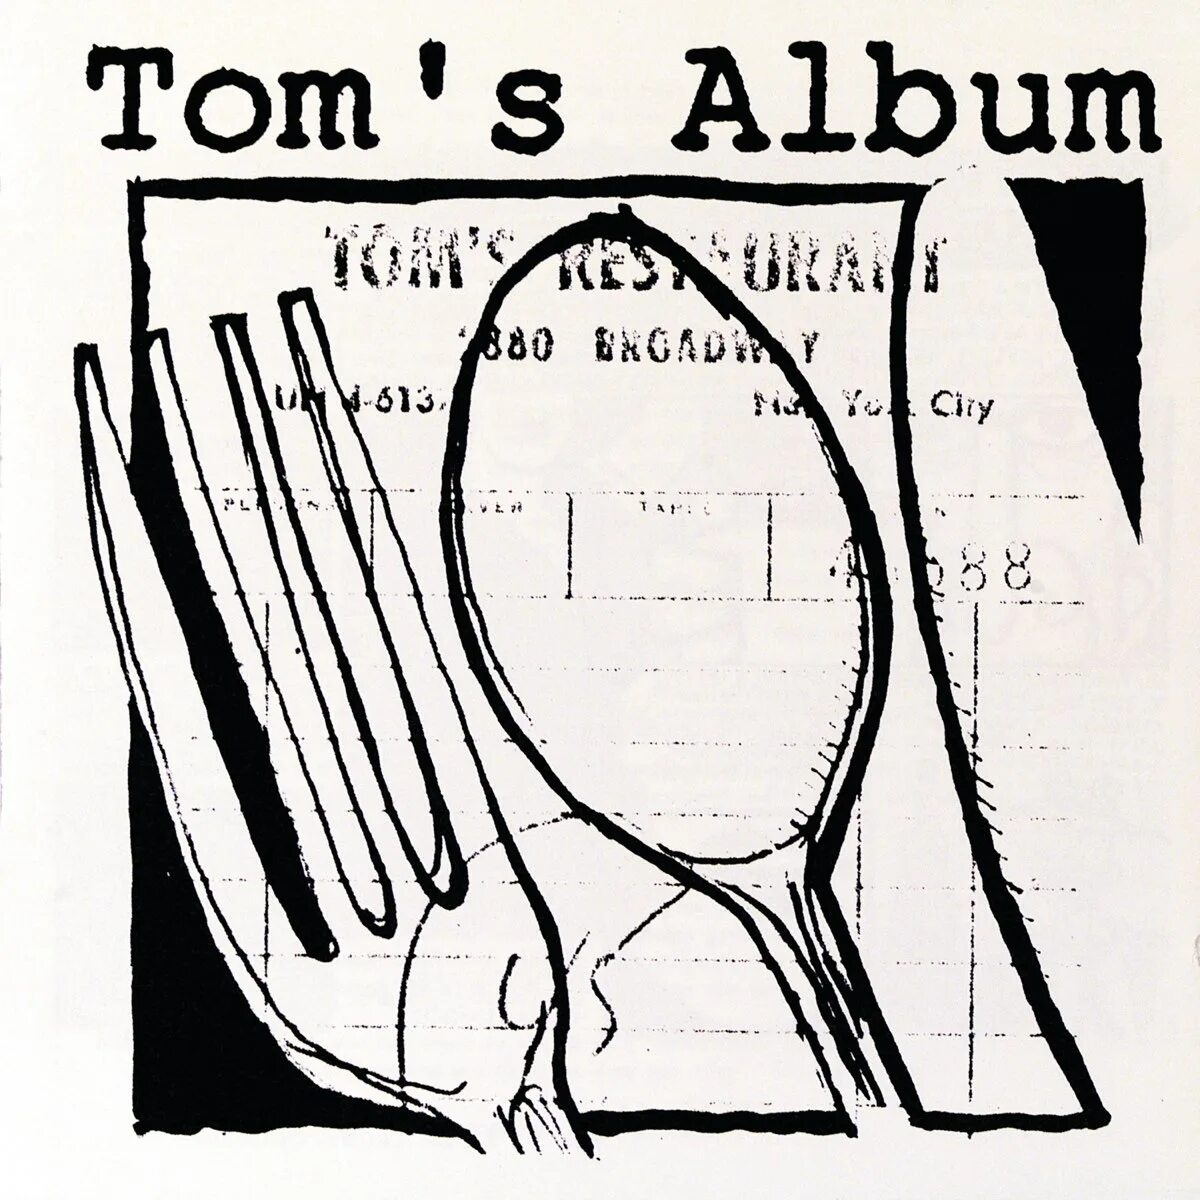 Tom s песня. DNA Tom's Diner. Suzanne Vega, DNA - Tom's Diner. DNA Tom's Diner обложка. Suzanne Vega Tom's Diner обложка.